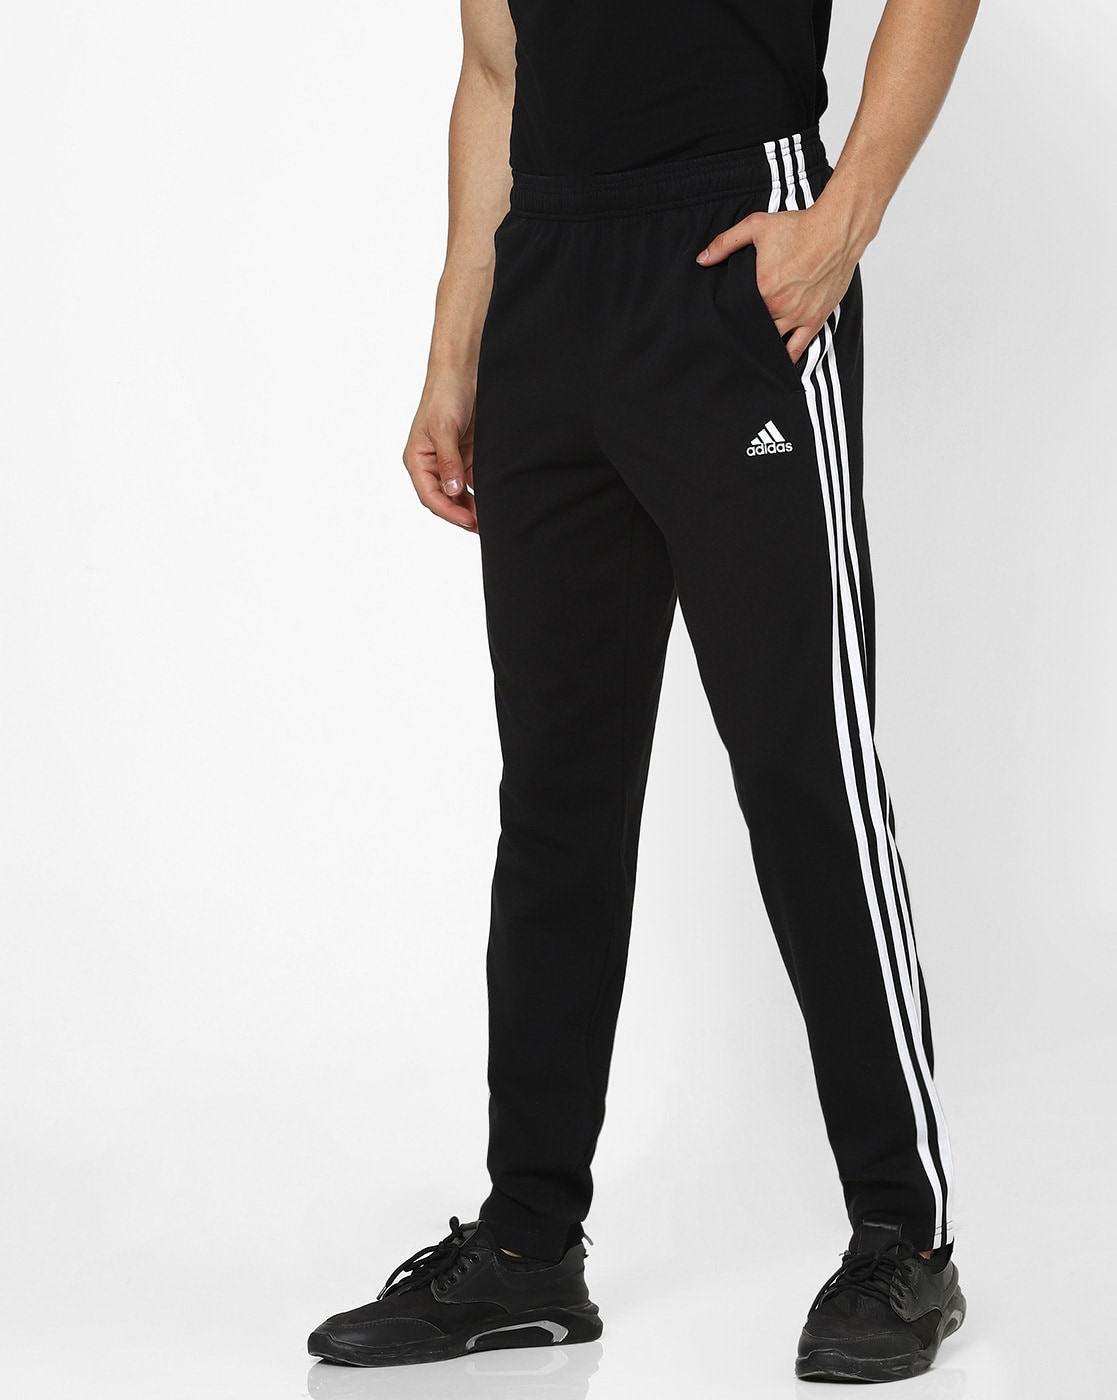 Adidas Sweatpants Mens Medium Black Straight Leg Varsity Stripe Polyester |  eBay